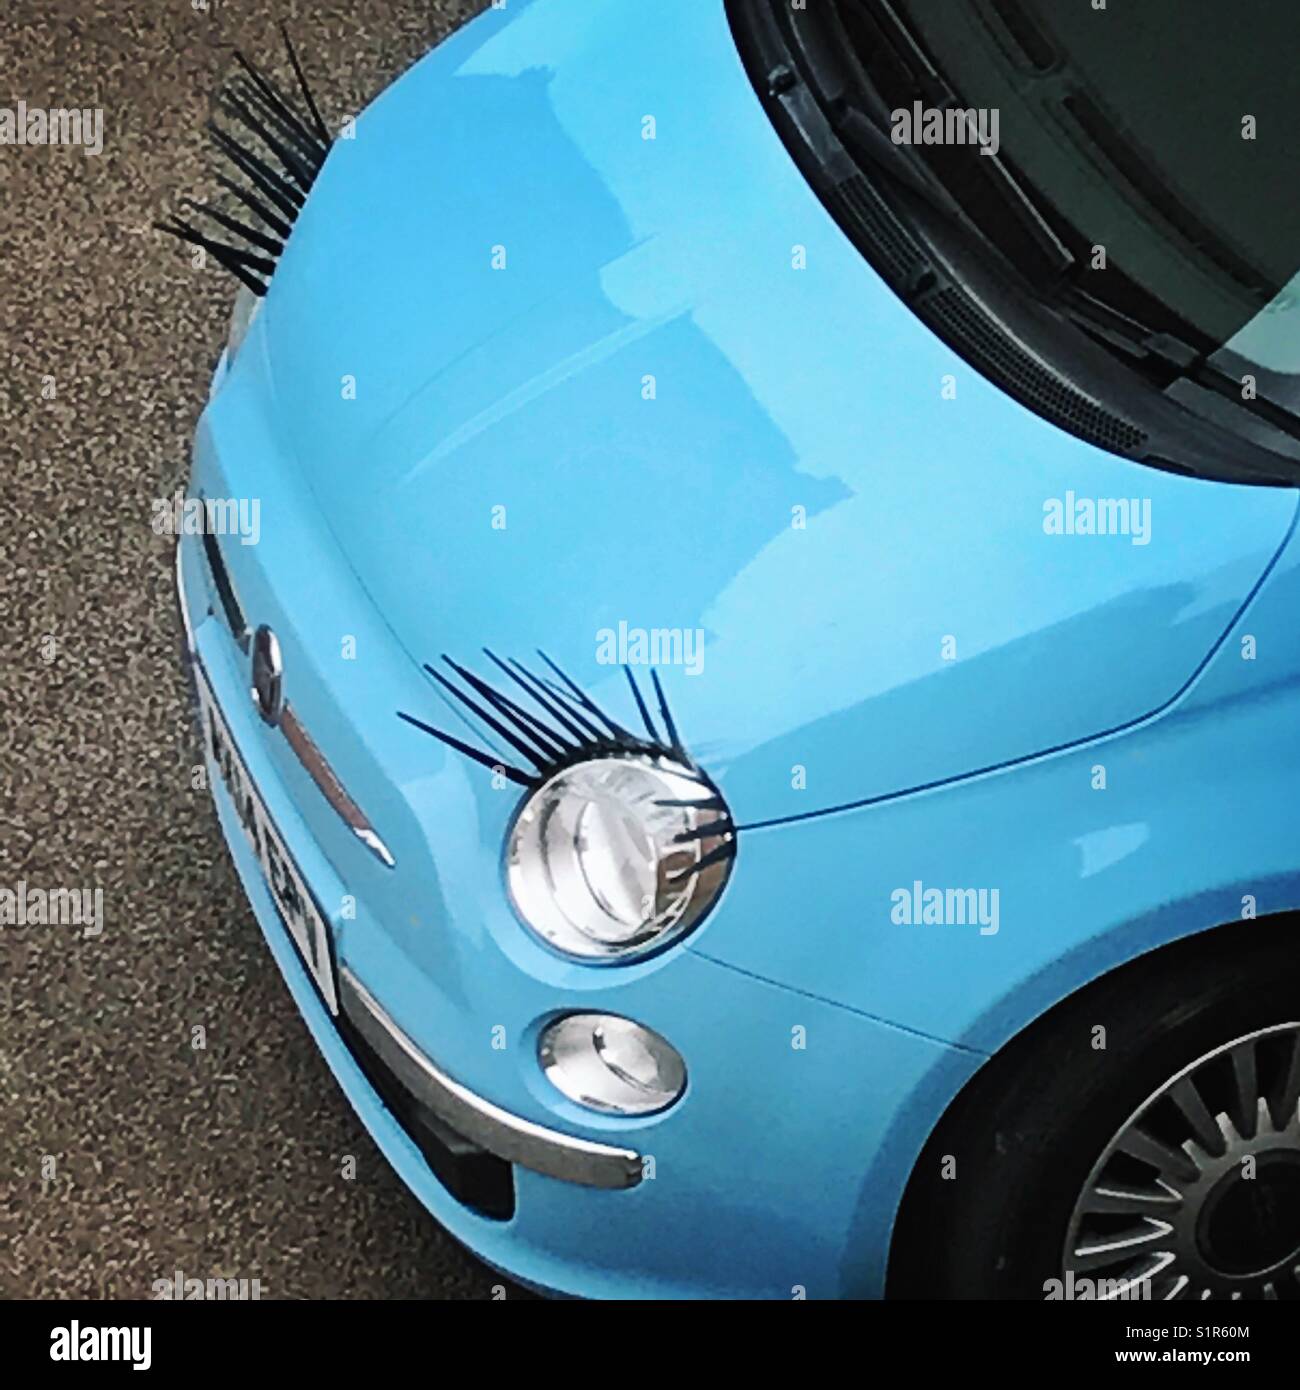 Car eye lashes headlight -Fotos und -Bildmaterial in hoher Auflösung – Alamy